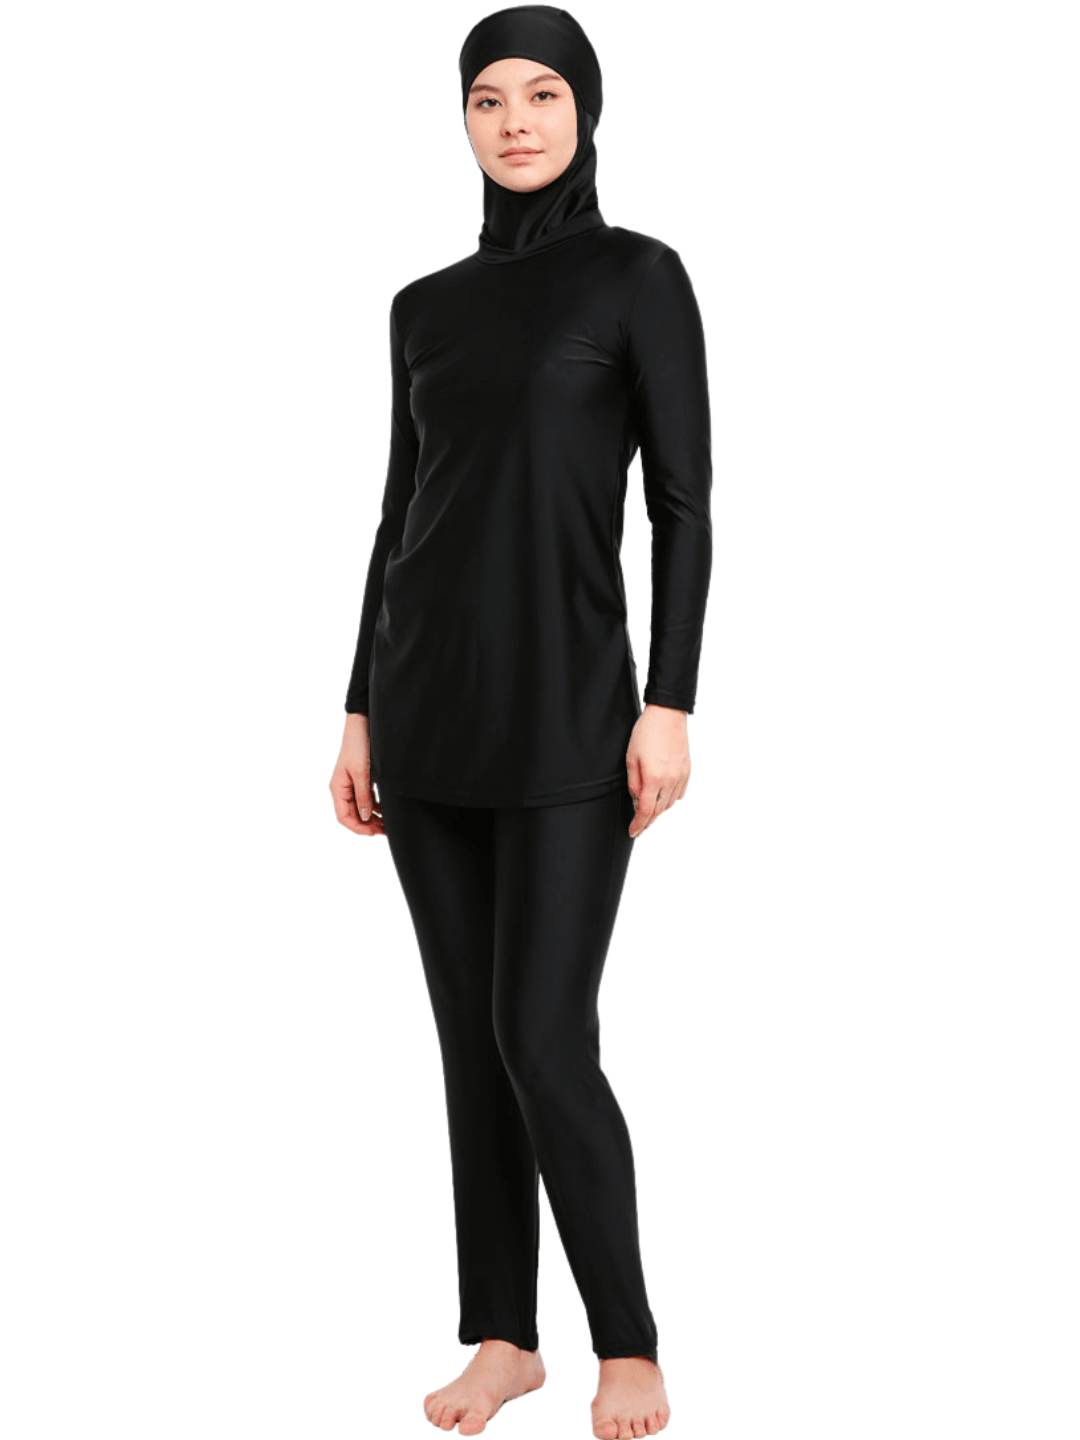 Modernly Modest Melur Muslimah Swimwear Set Black (Plus Size Available) - Pink N' Proper